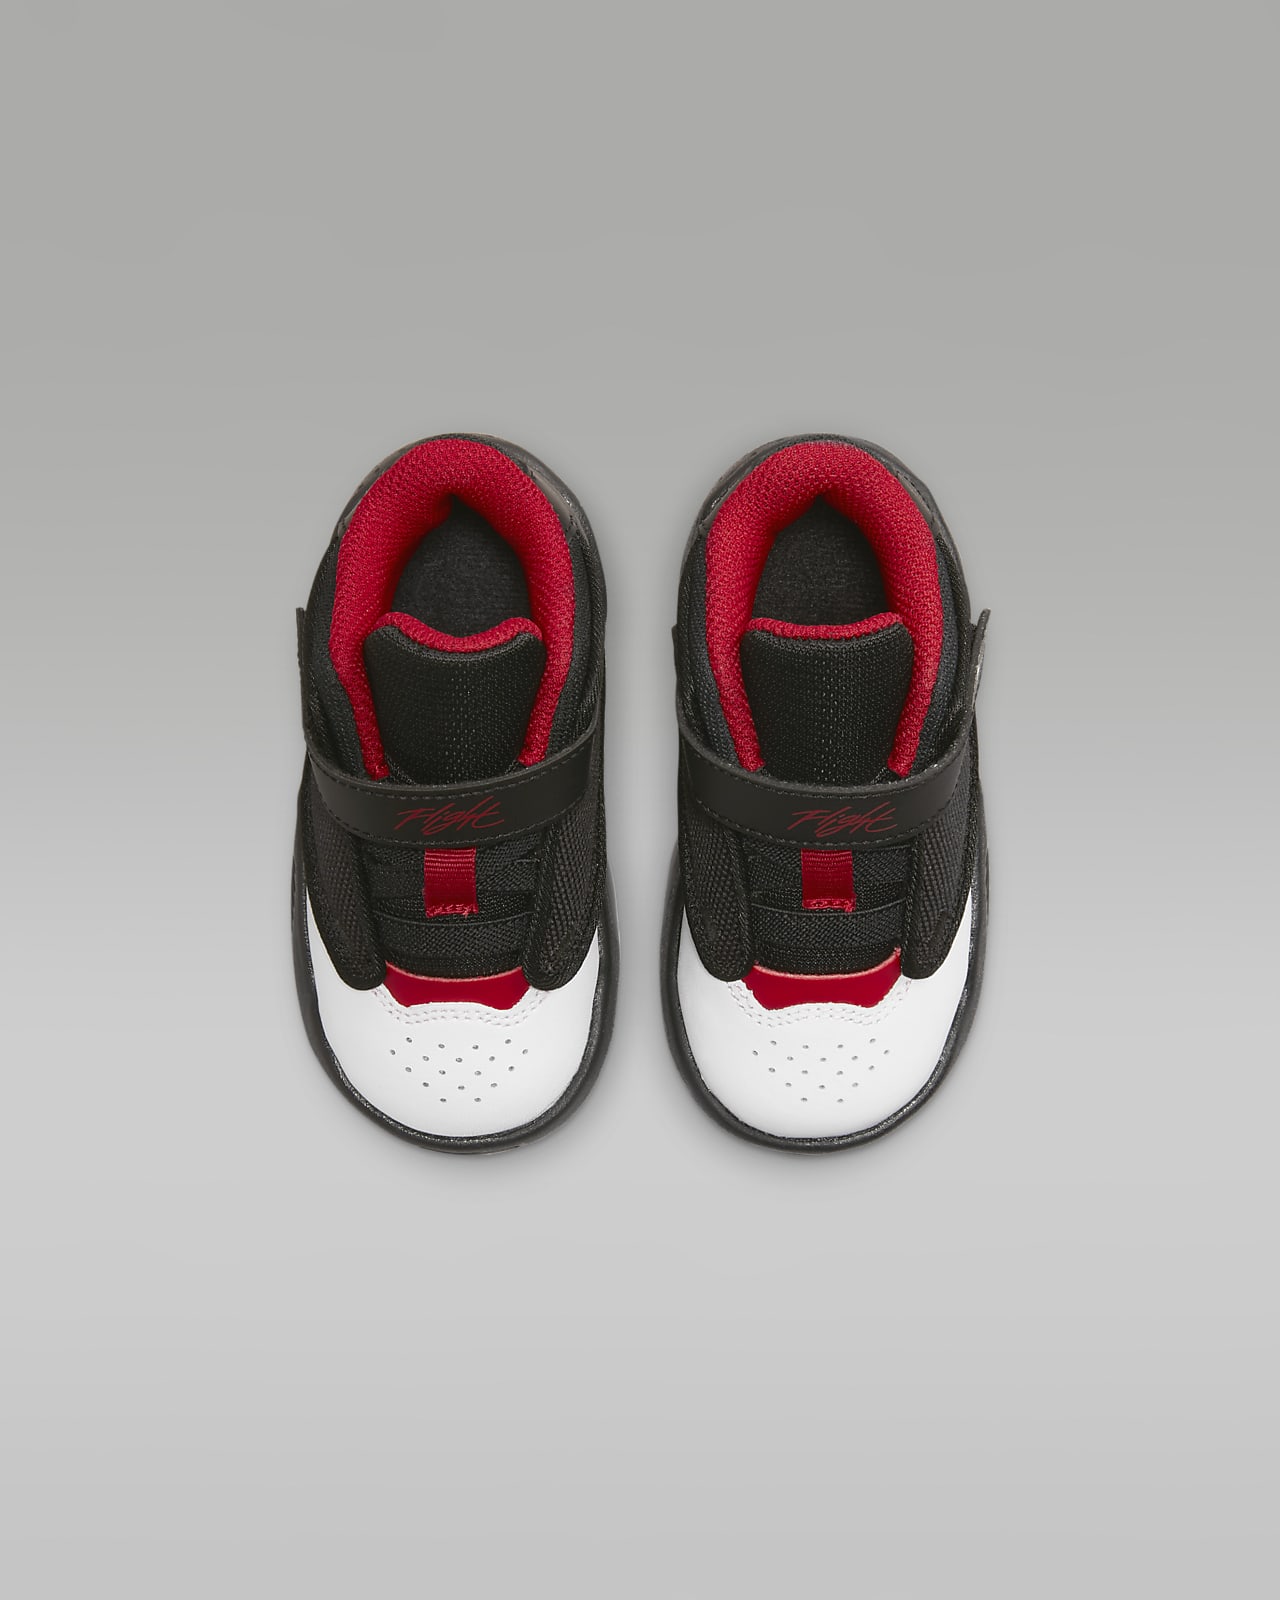 Jordan Max Aura 4 Baby/Toddler Shoes